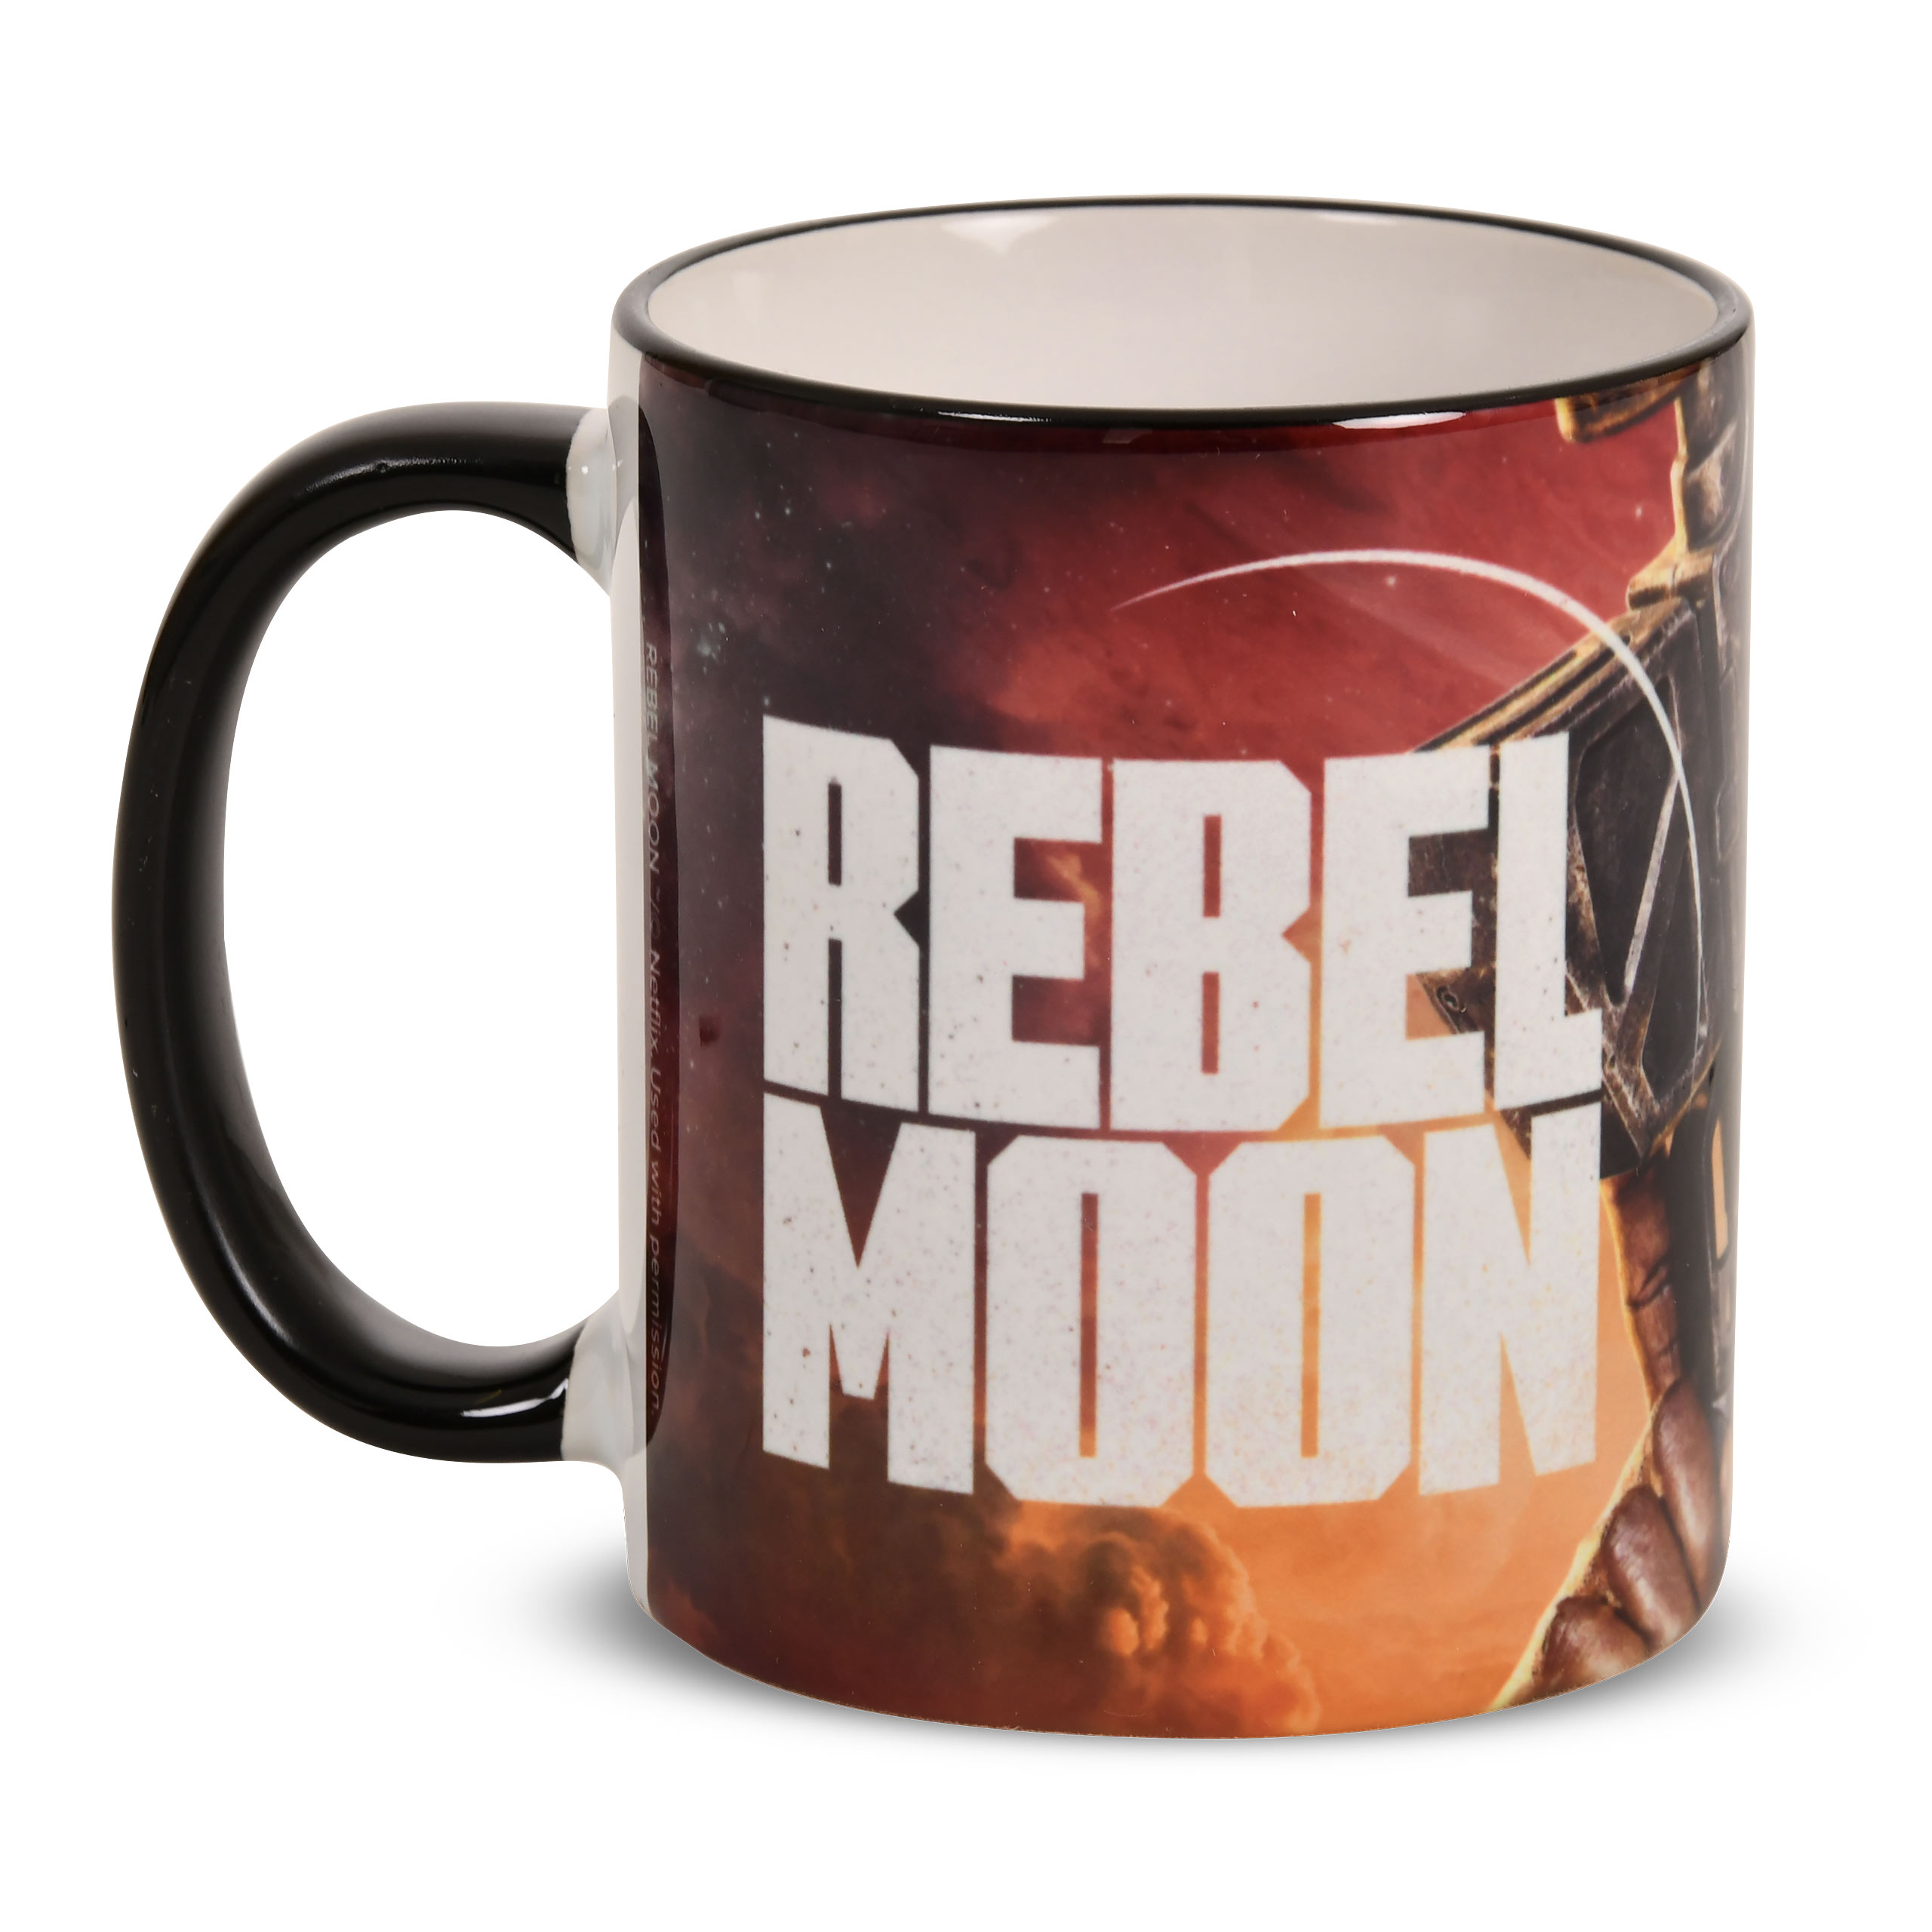 Rebel Moon - Titus Mok